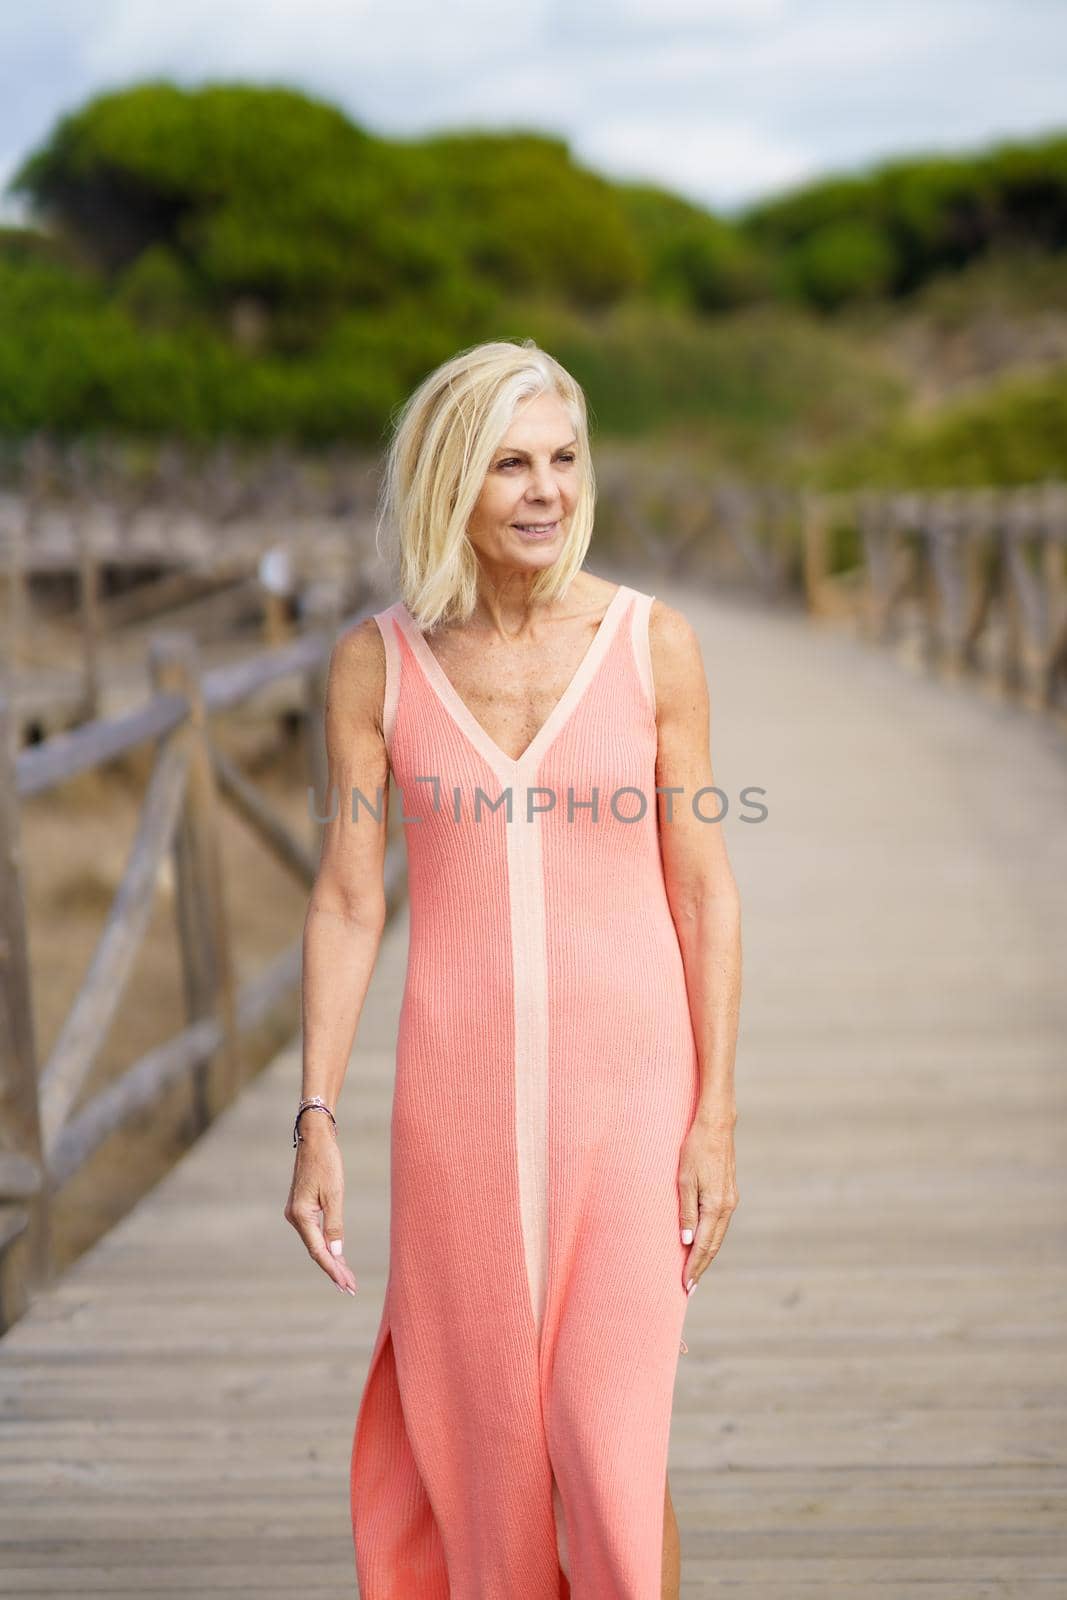 Beautiful mature female walking along a wooden path near the beach., wearing a nice orange dress. Elderly woman enjoying her retirement at a seaside retreat.